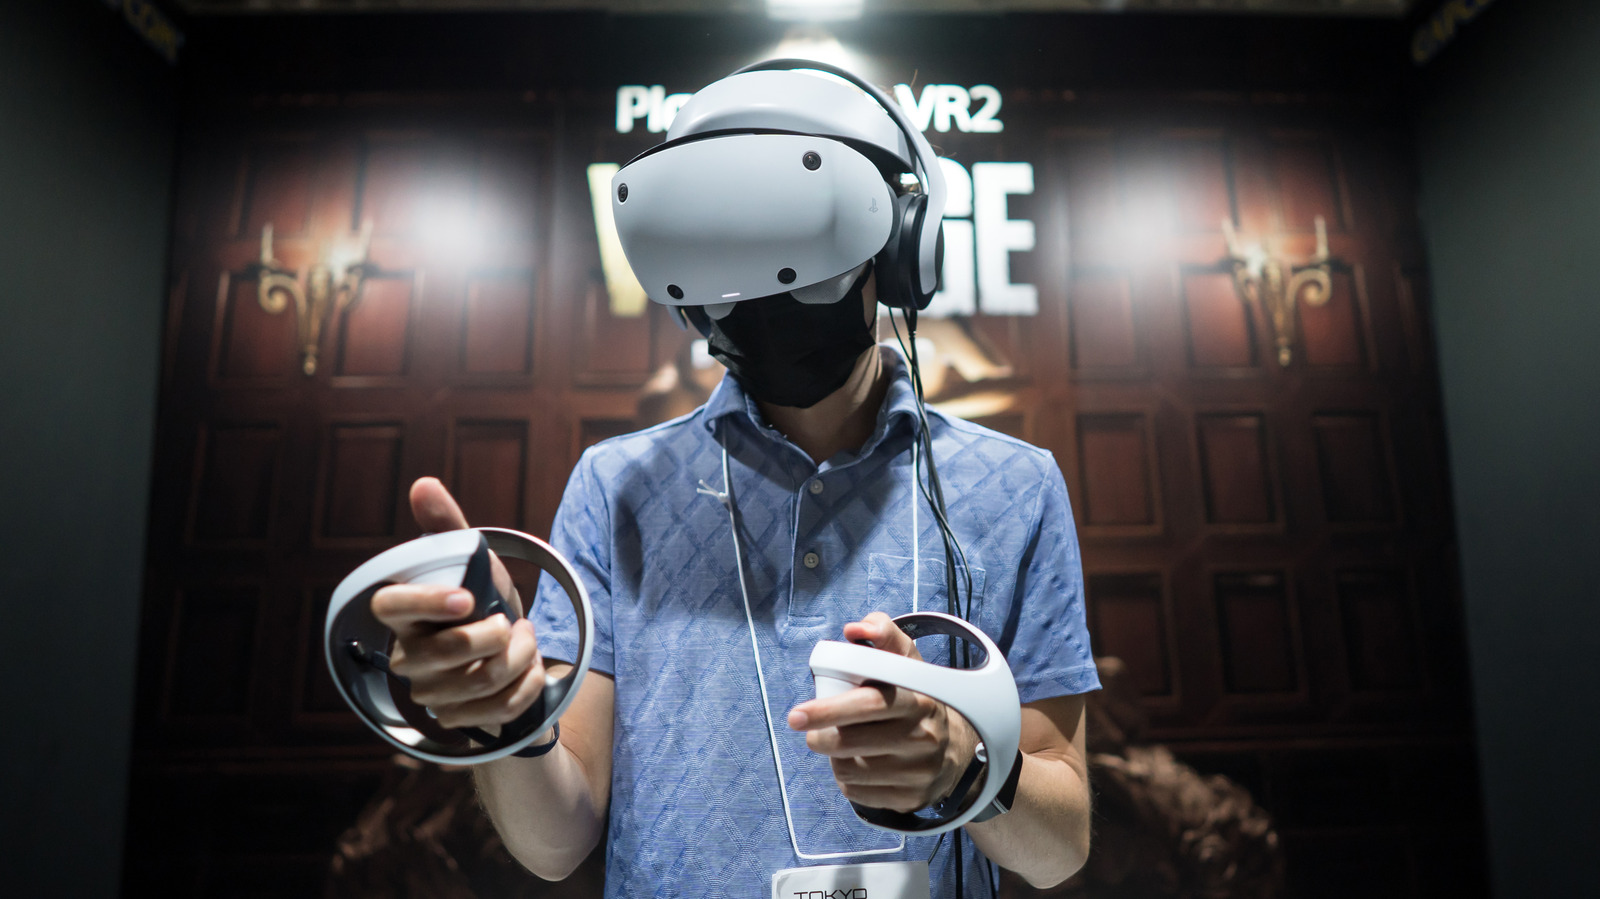 PlayStation VR2 Revealed Alongside New Horizon Game